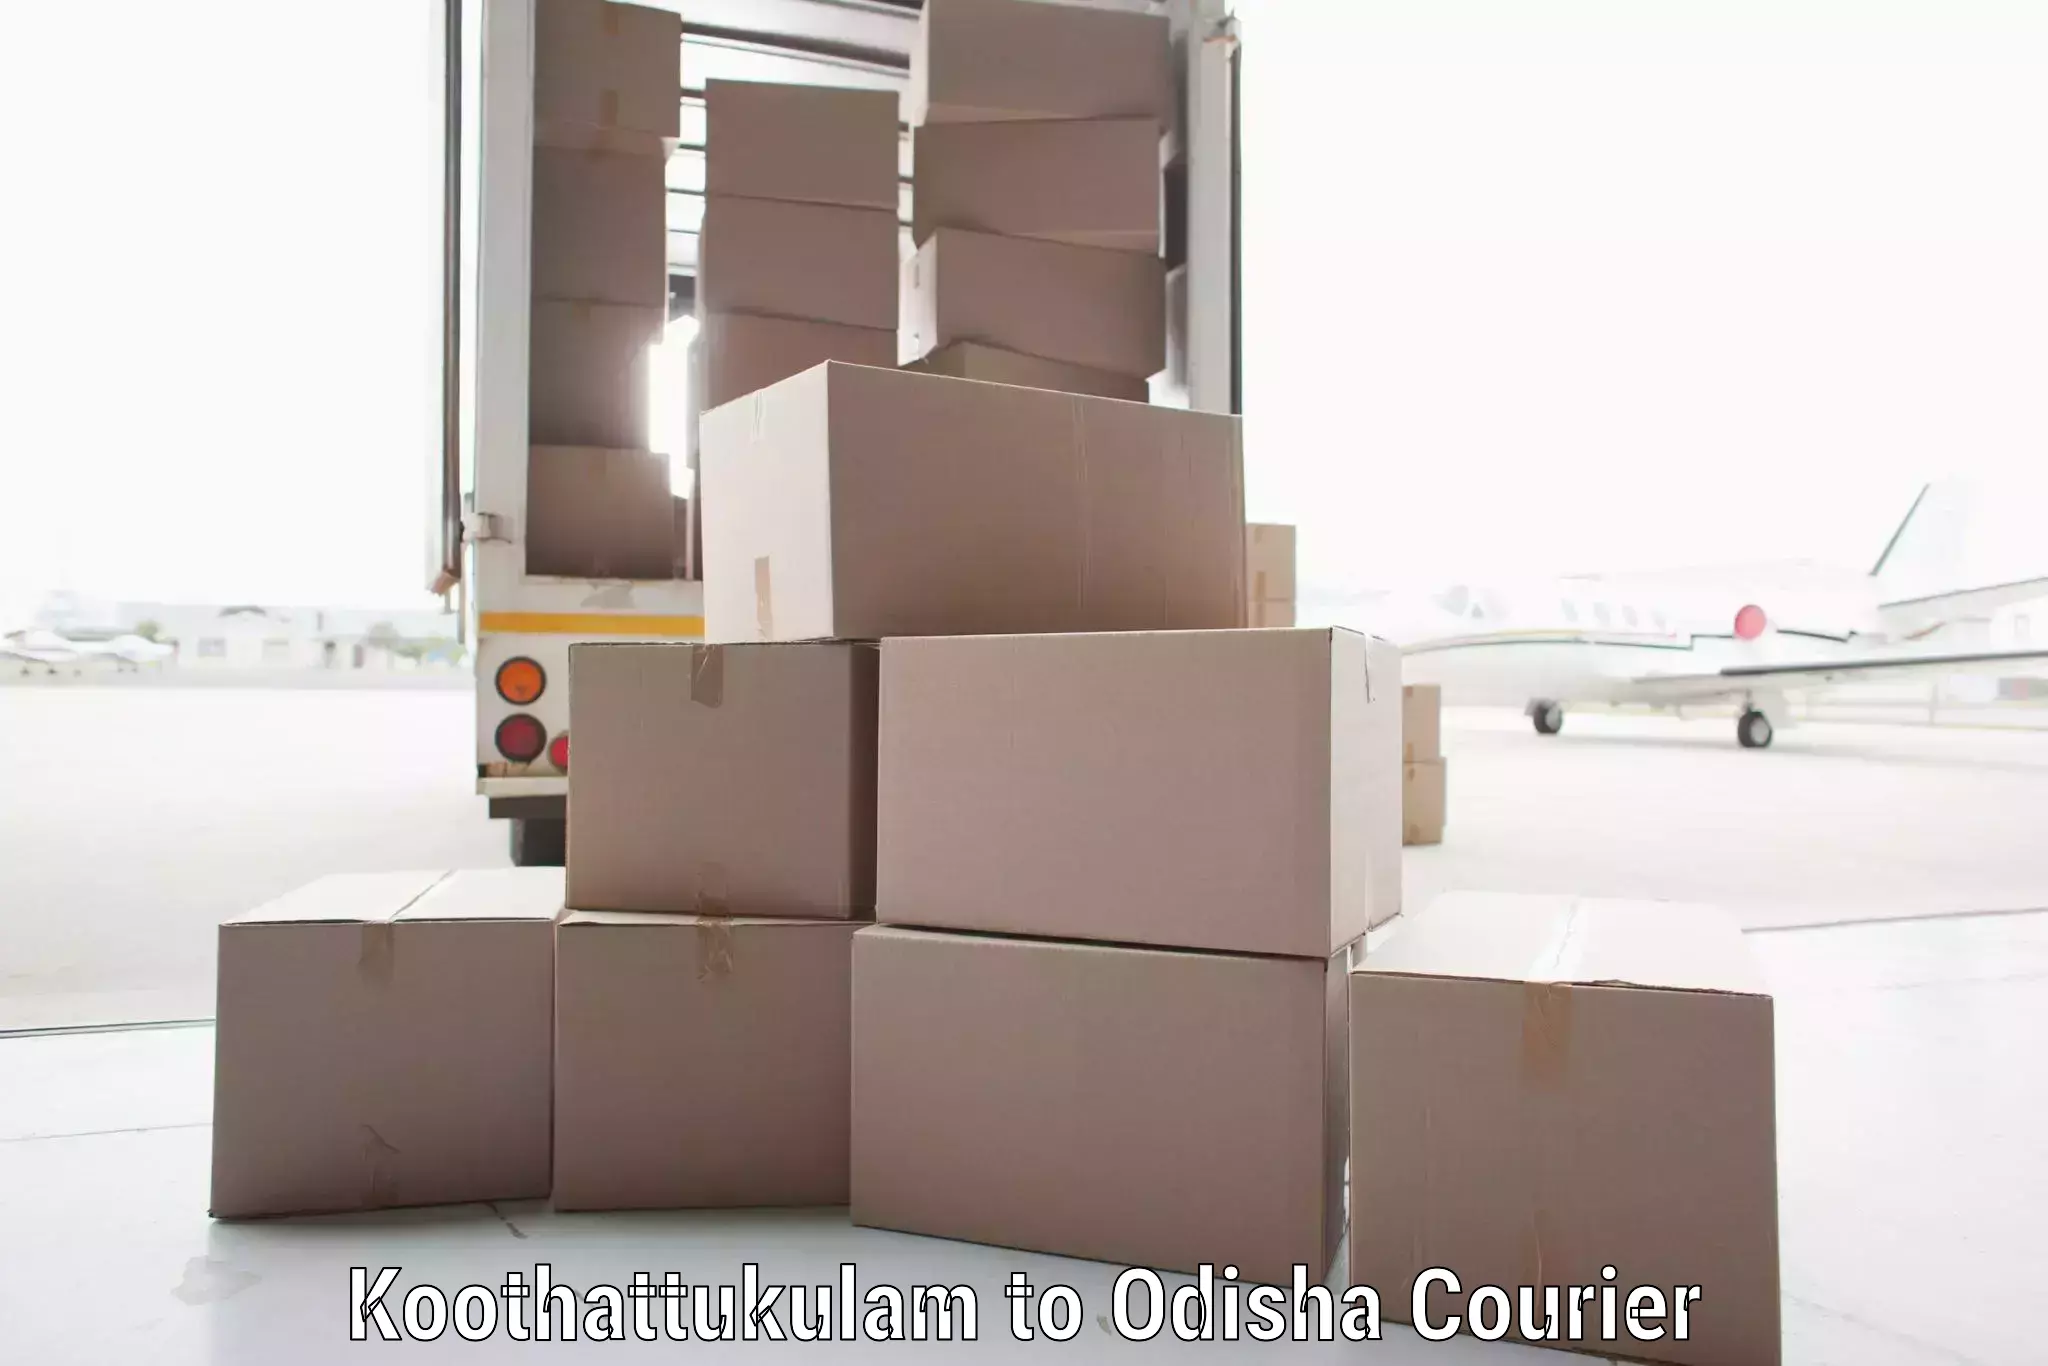 On-demand shipping options Koothattukulam to Odisha